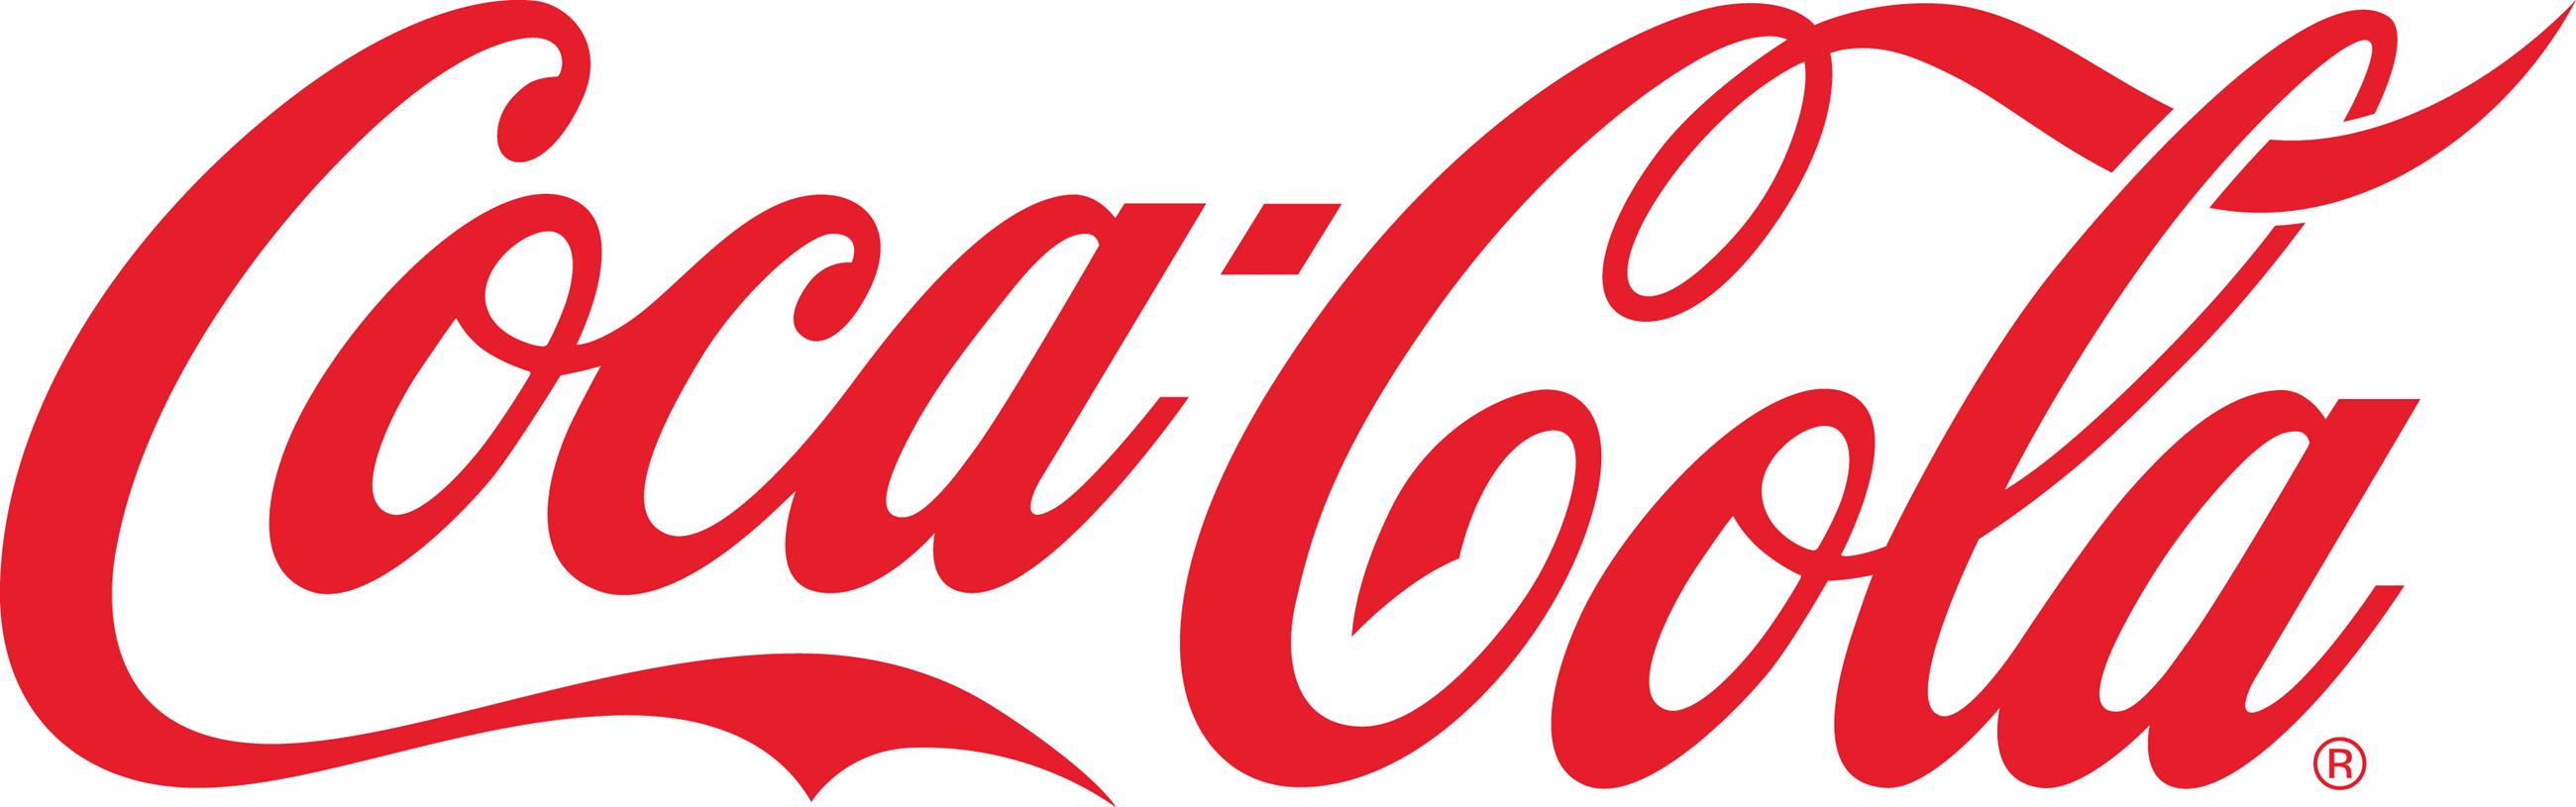 Coca Cola Opens in new window